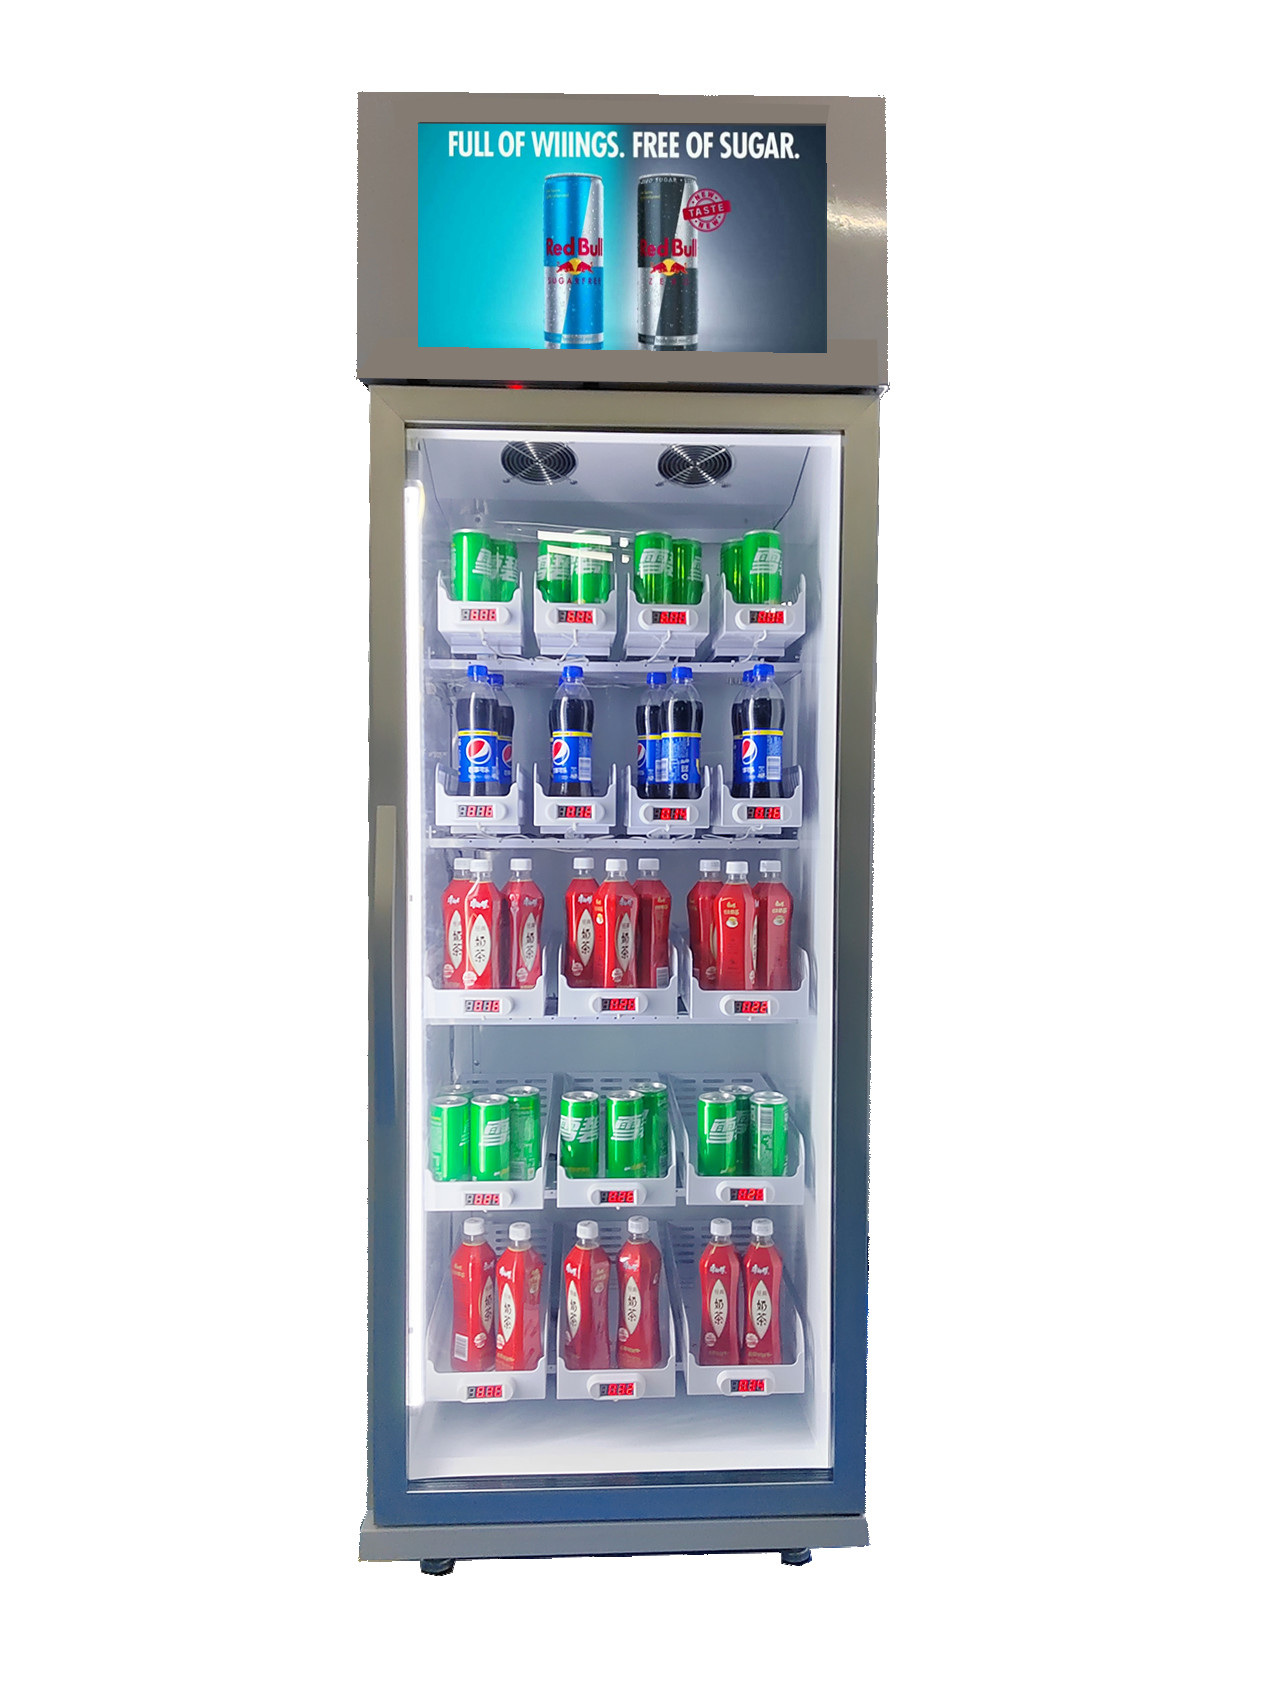 Quality Micron Smart Vending Fresh Food Snack Drink Smart Fridge Vending Machine With Card Reader for sale